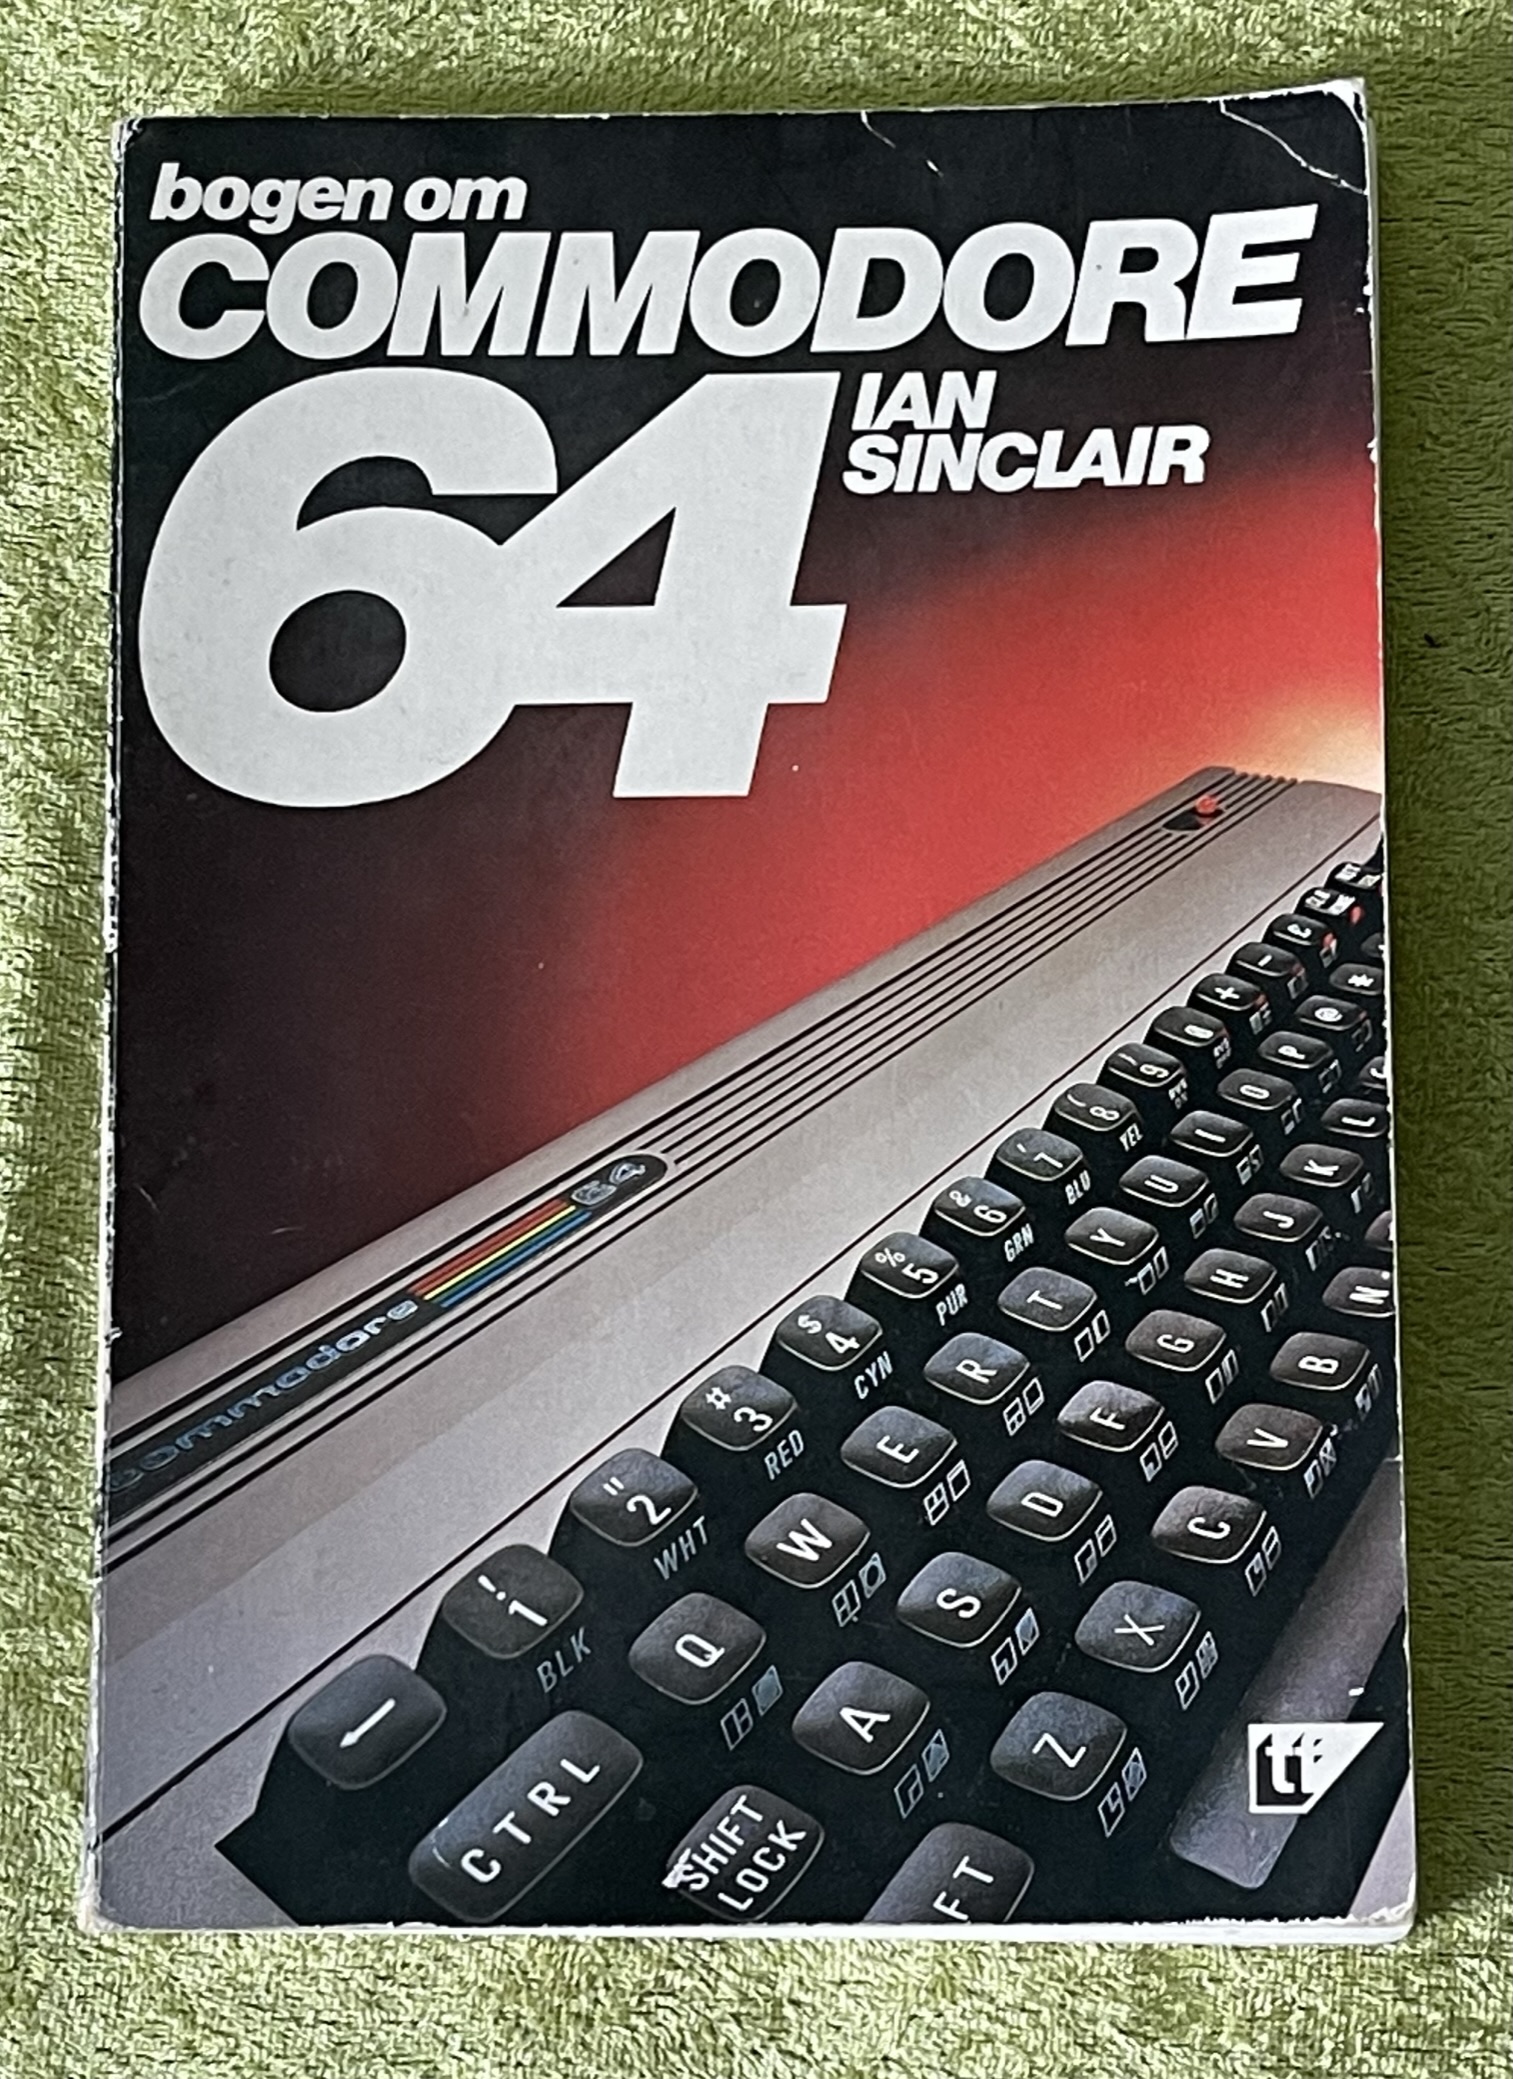 The Book For Commodore 64